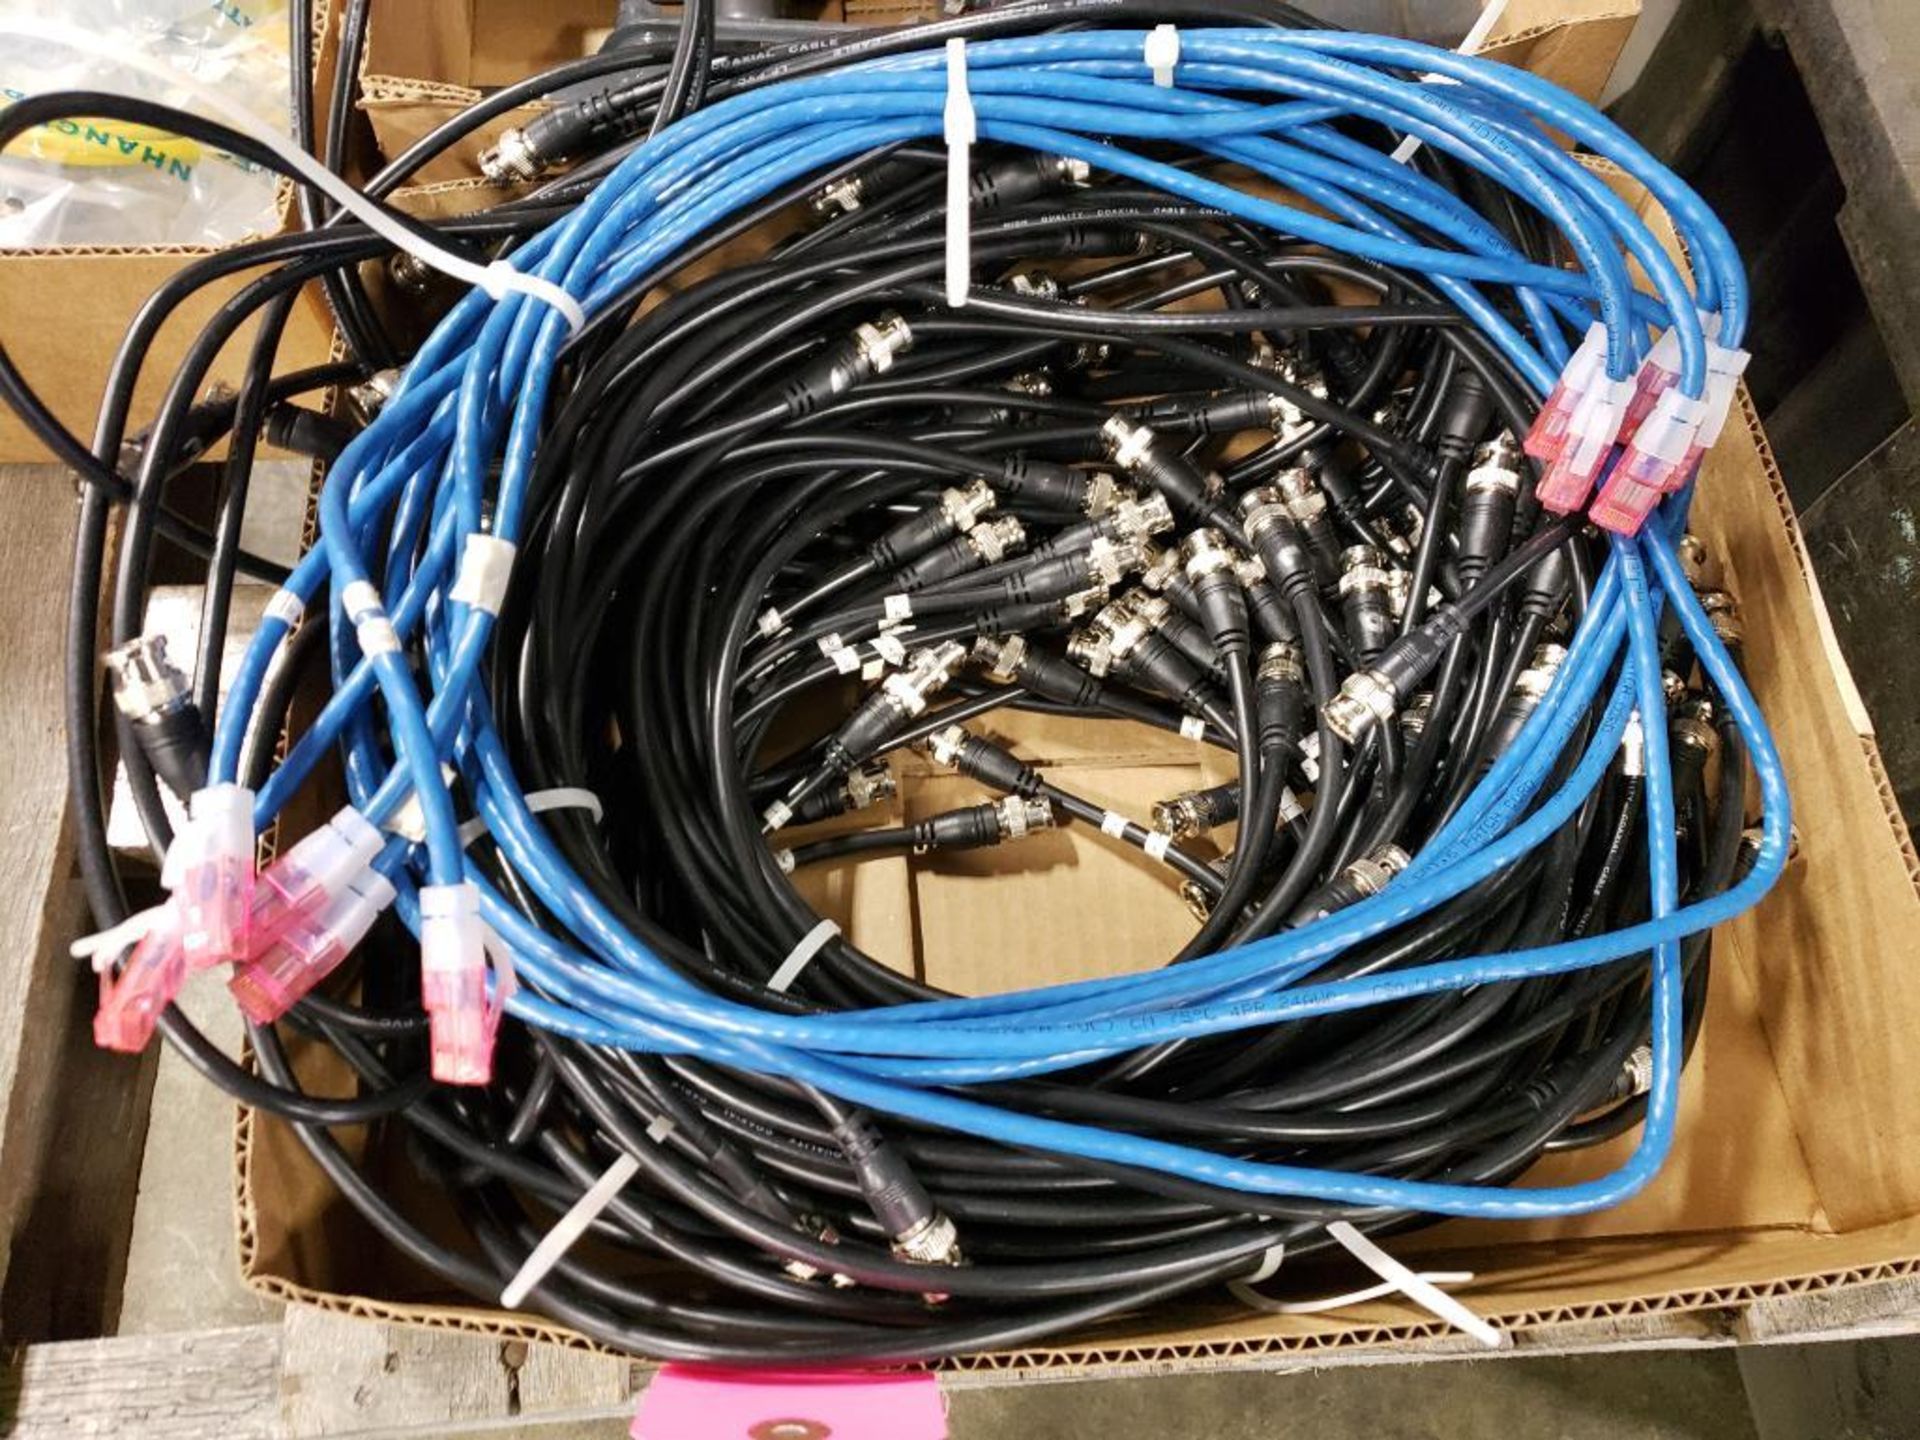 Large assortment of connectors.